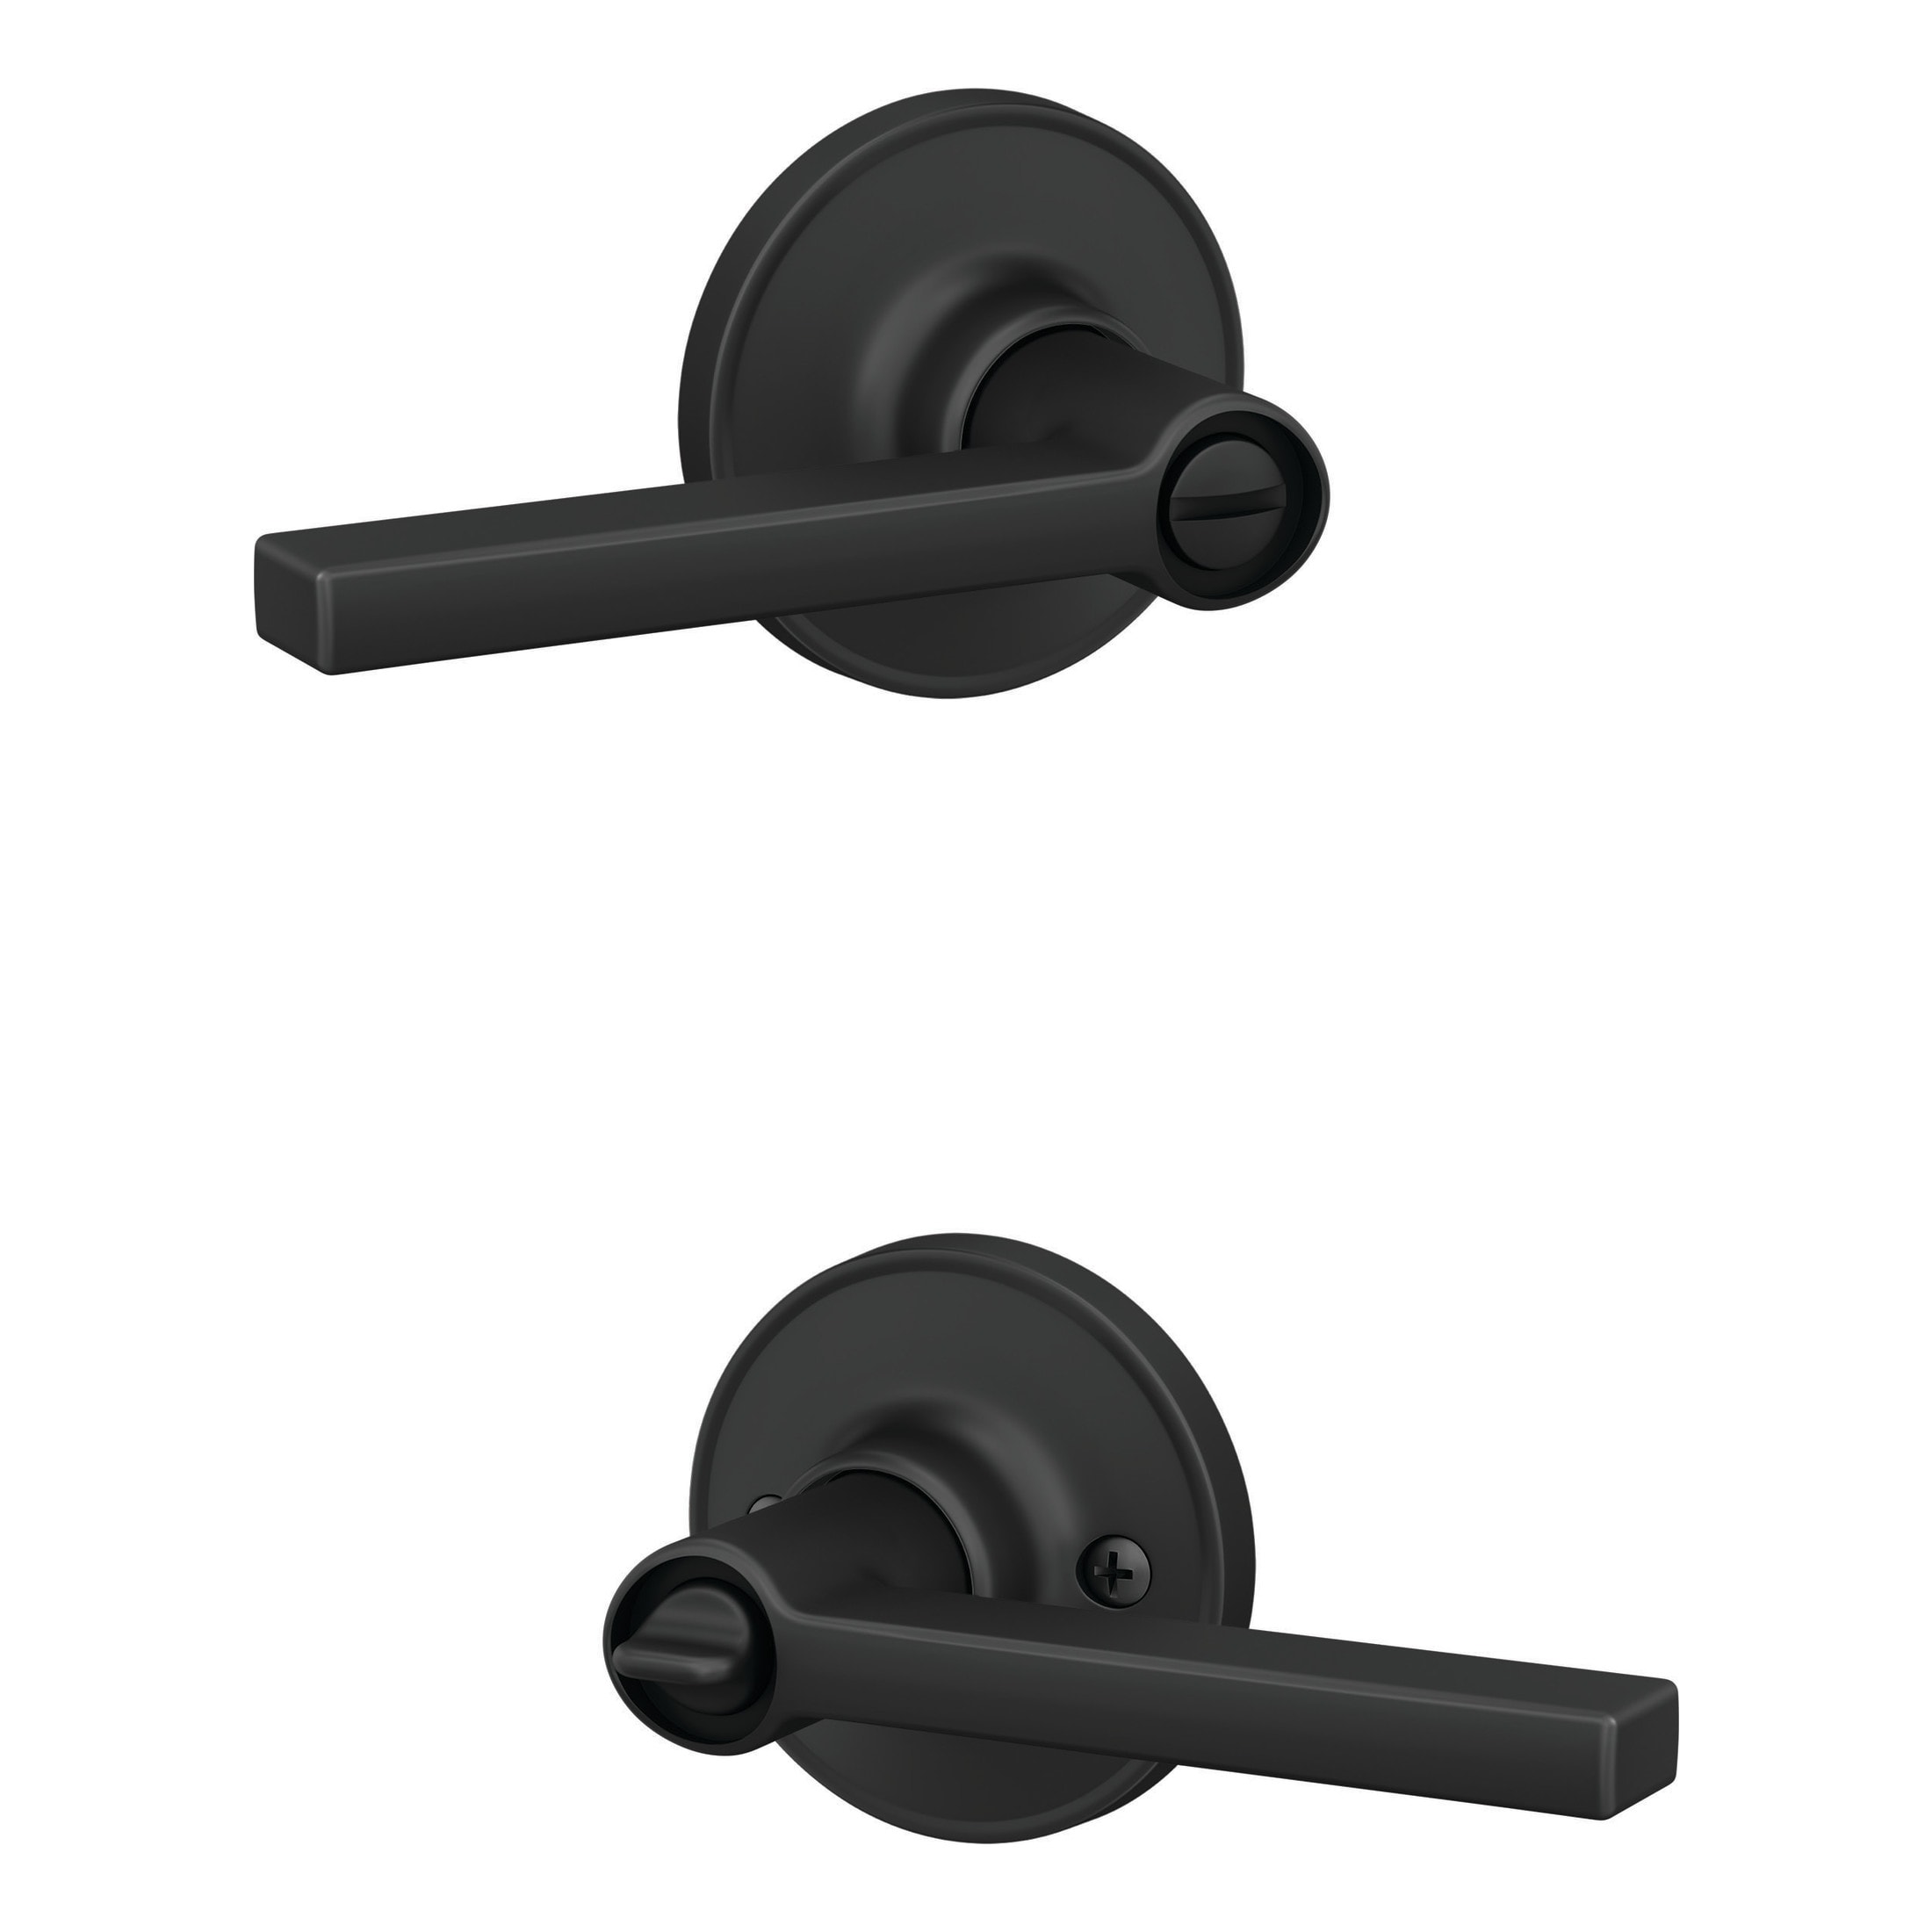 Black Door Handles Wave Style Levers, Entry Keyed/Privacy Lock